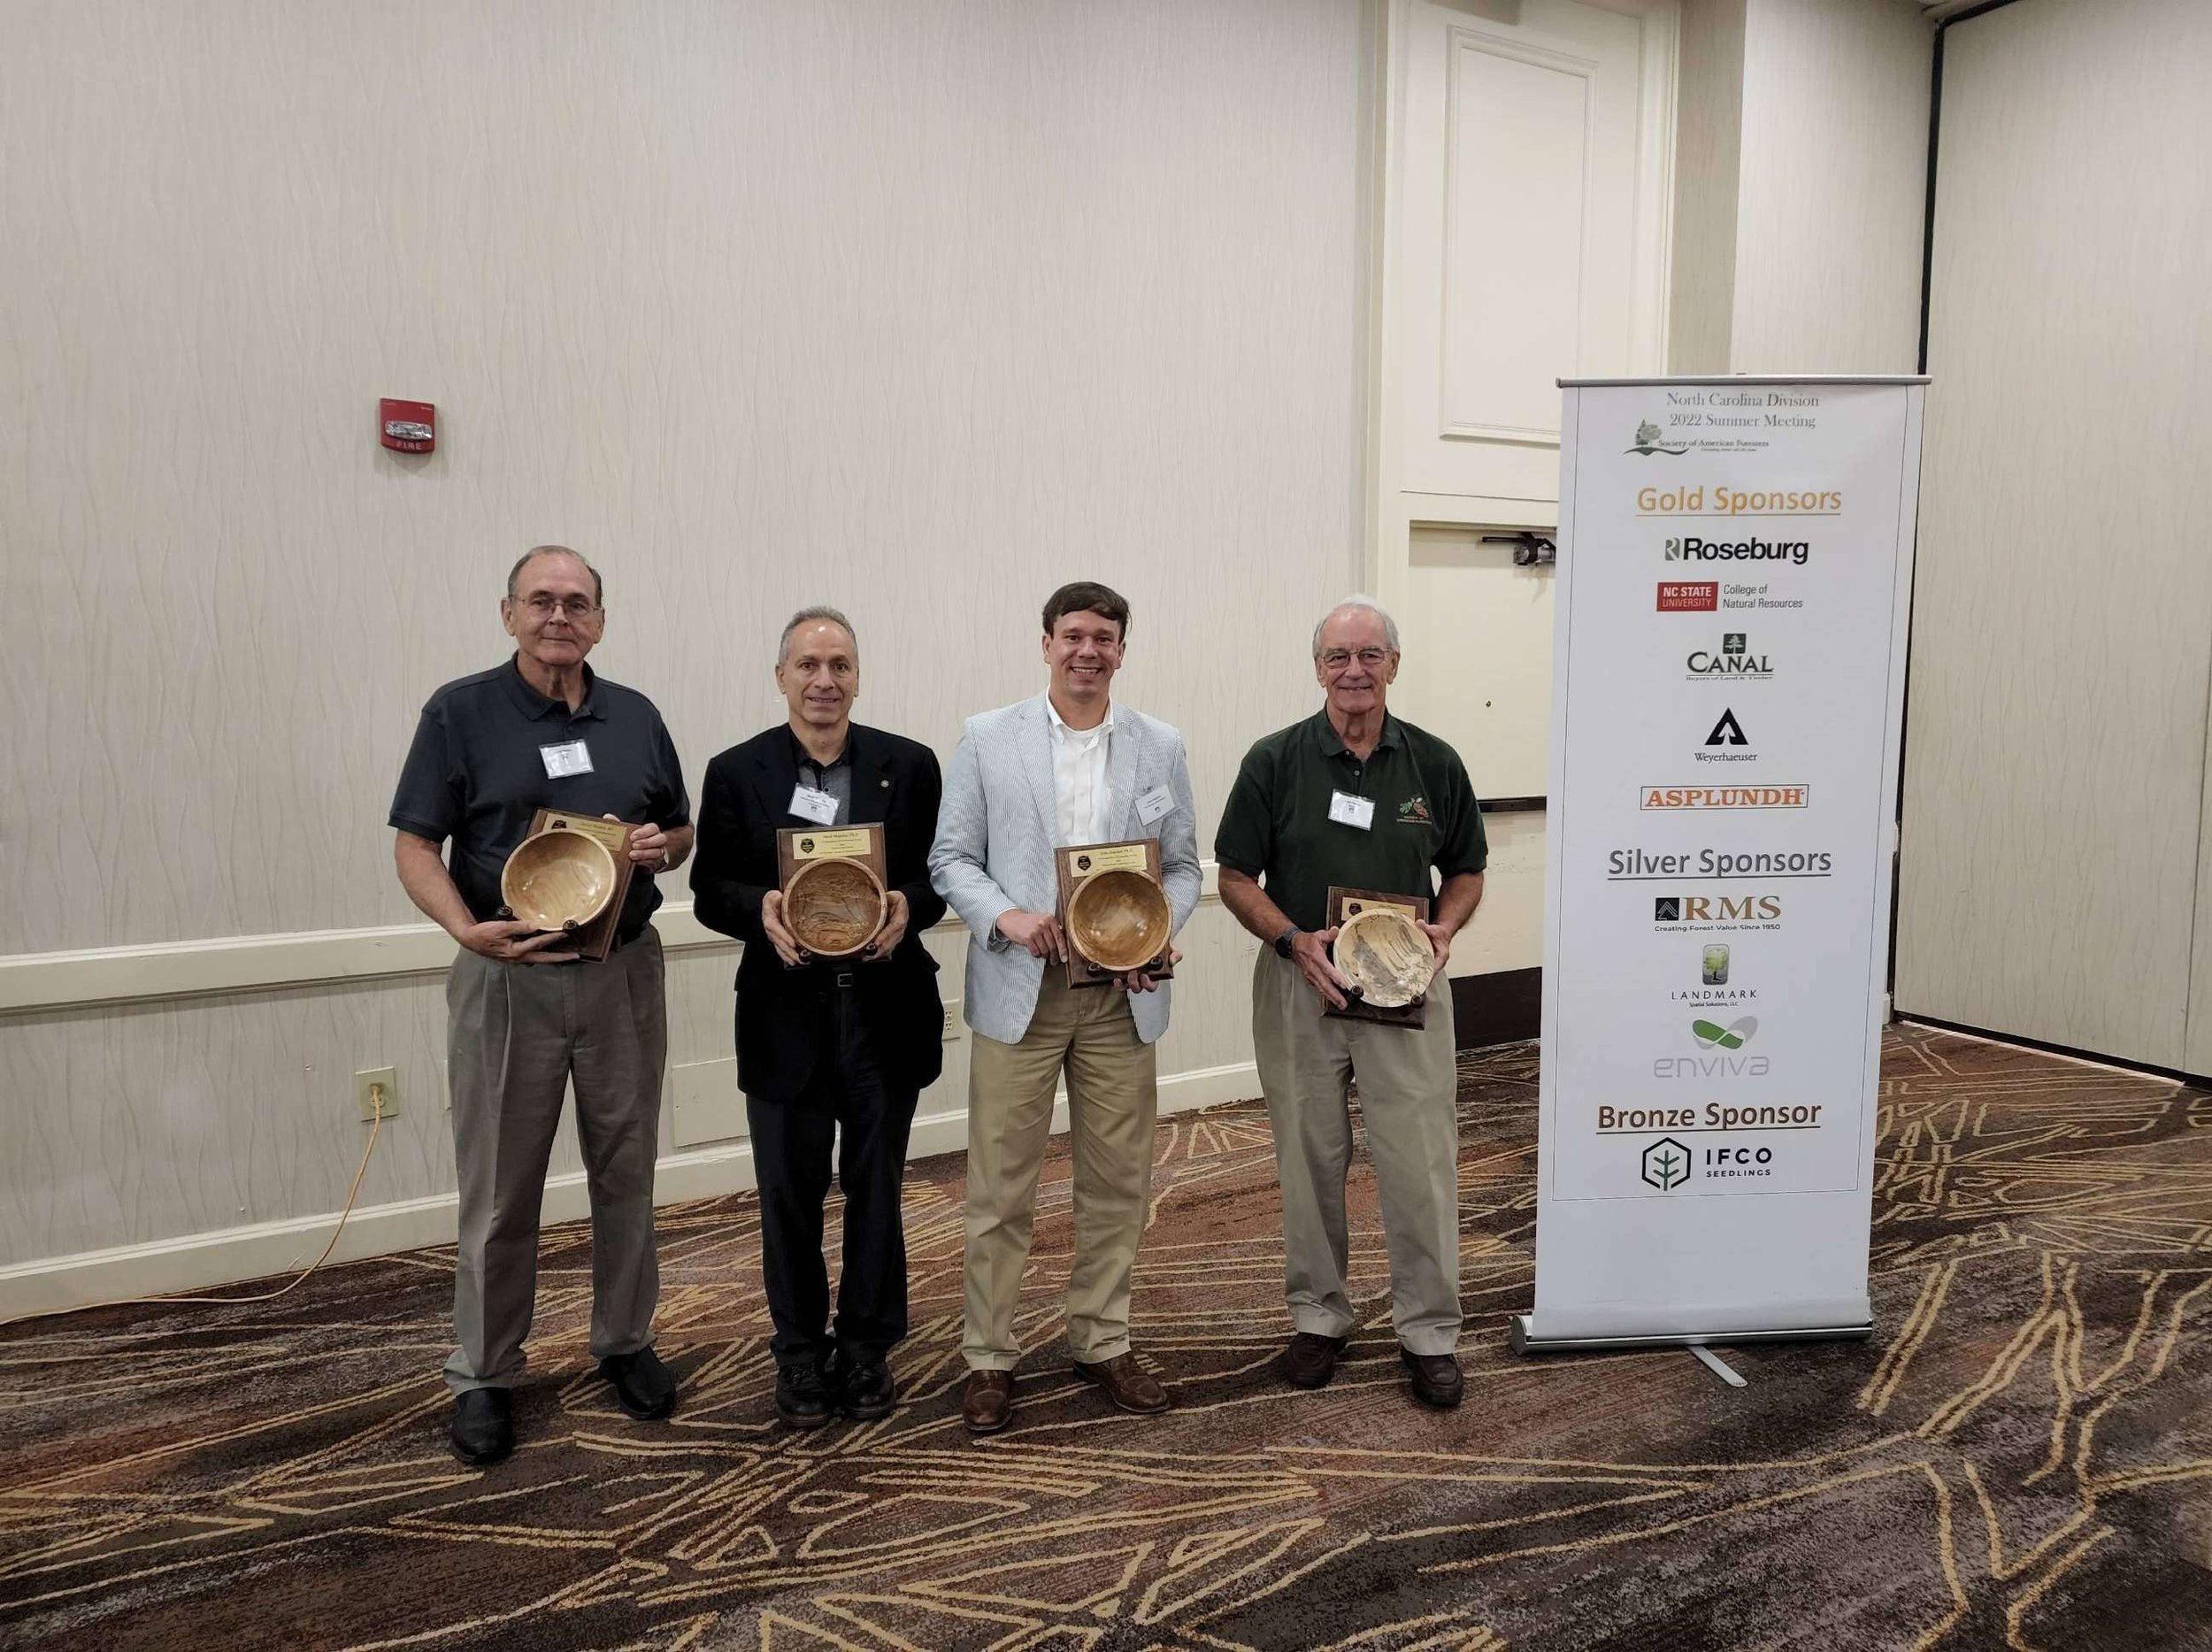 2022 Award Recipients at the NC Summer Meeting in Winston-Salem